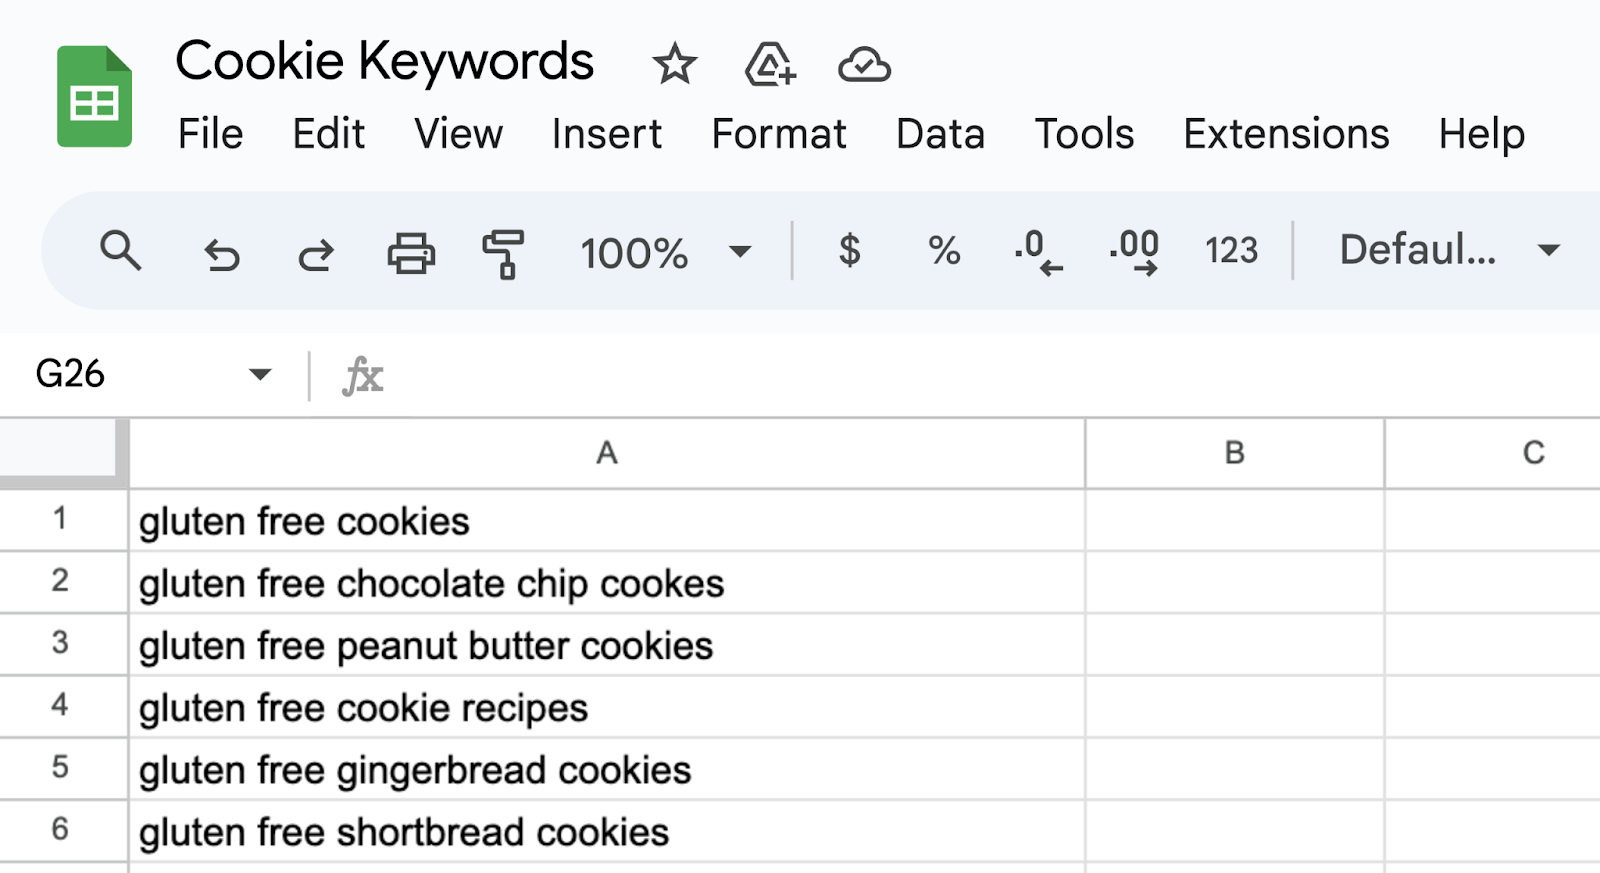 Google spreadsheet titled "Cookie Keywords"